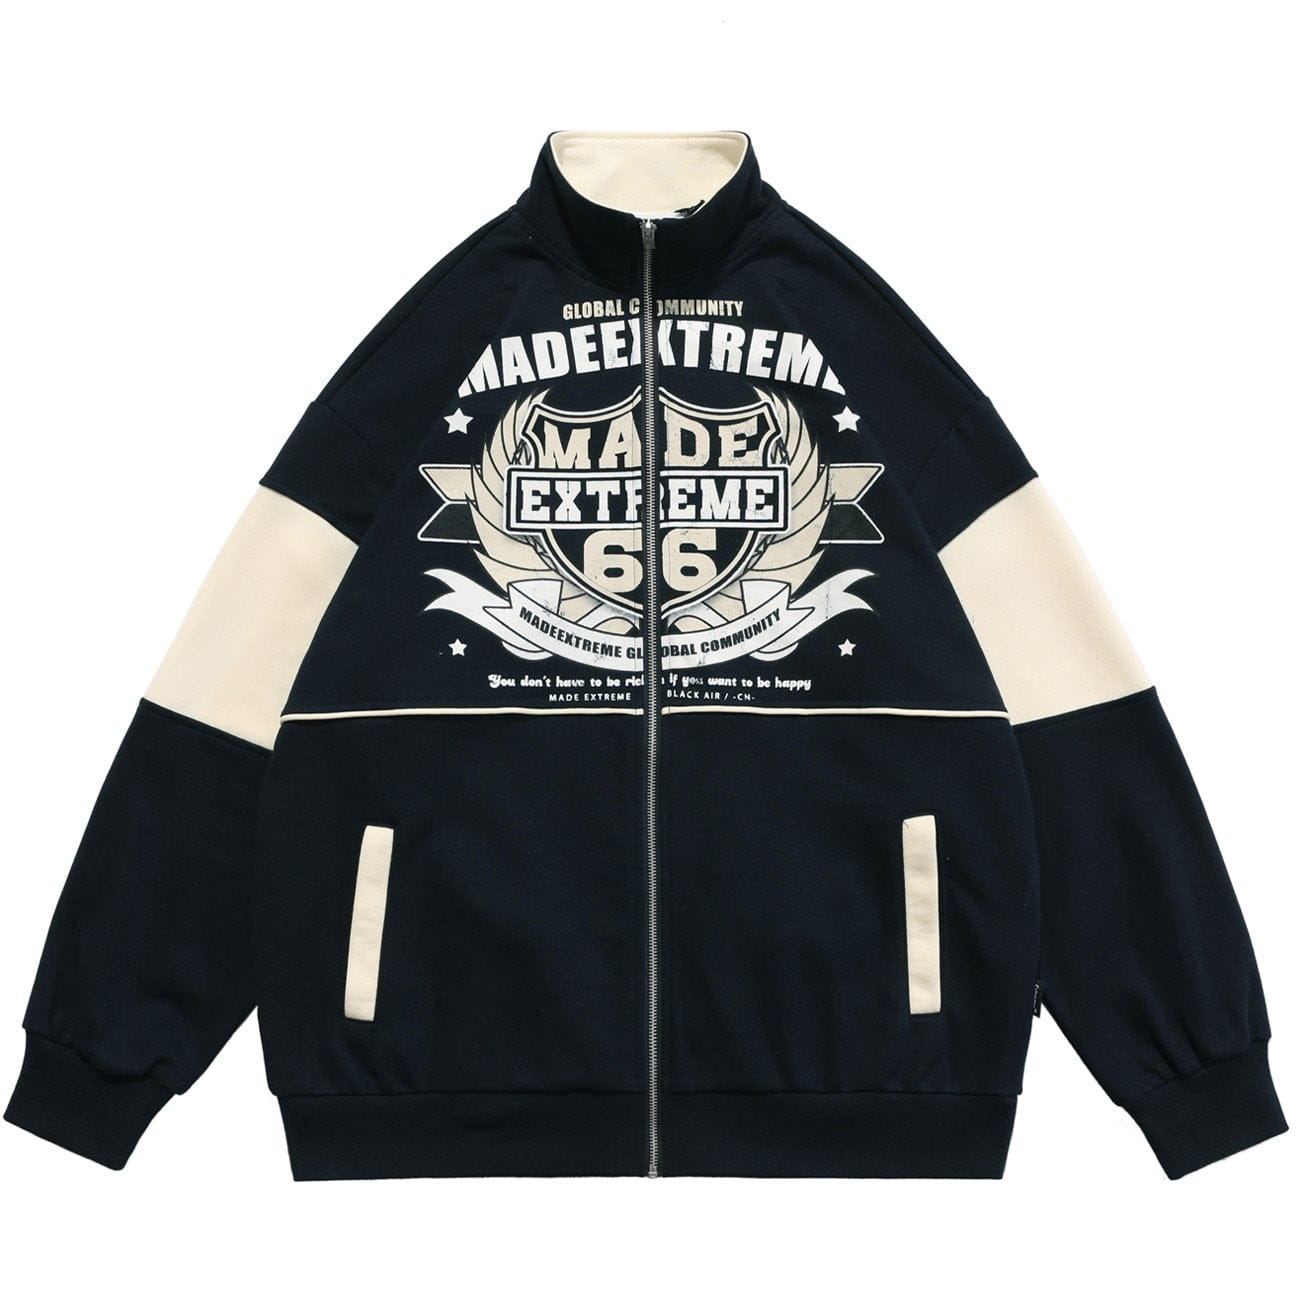 Majesda® - Letter Print Splicing Jacket outfit ideas, streetwear fashion - majesda.com